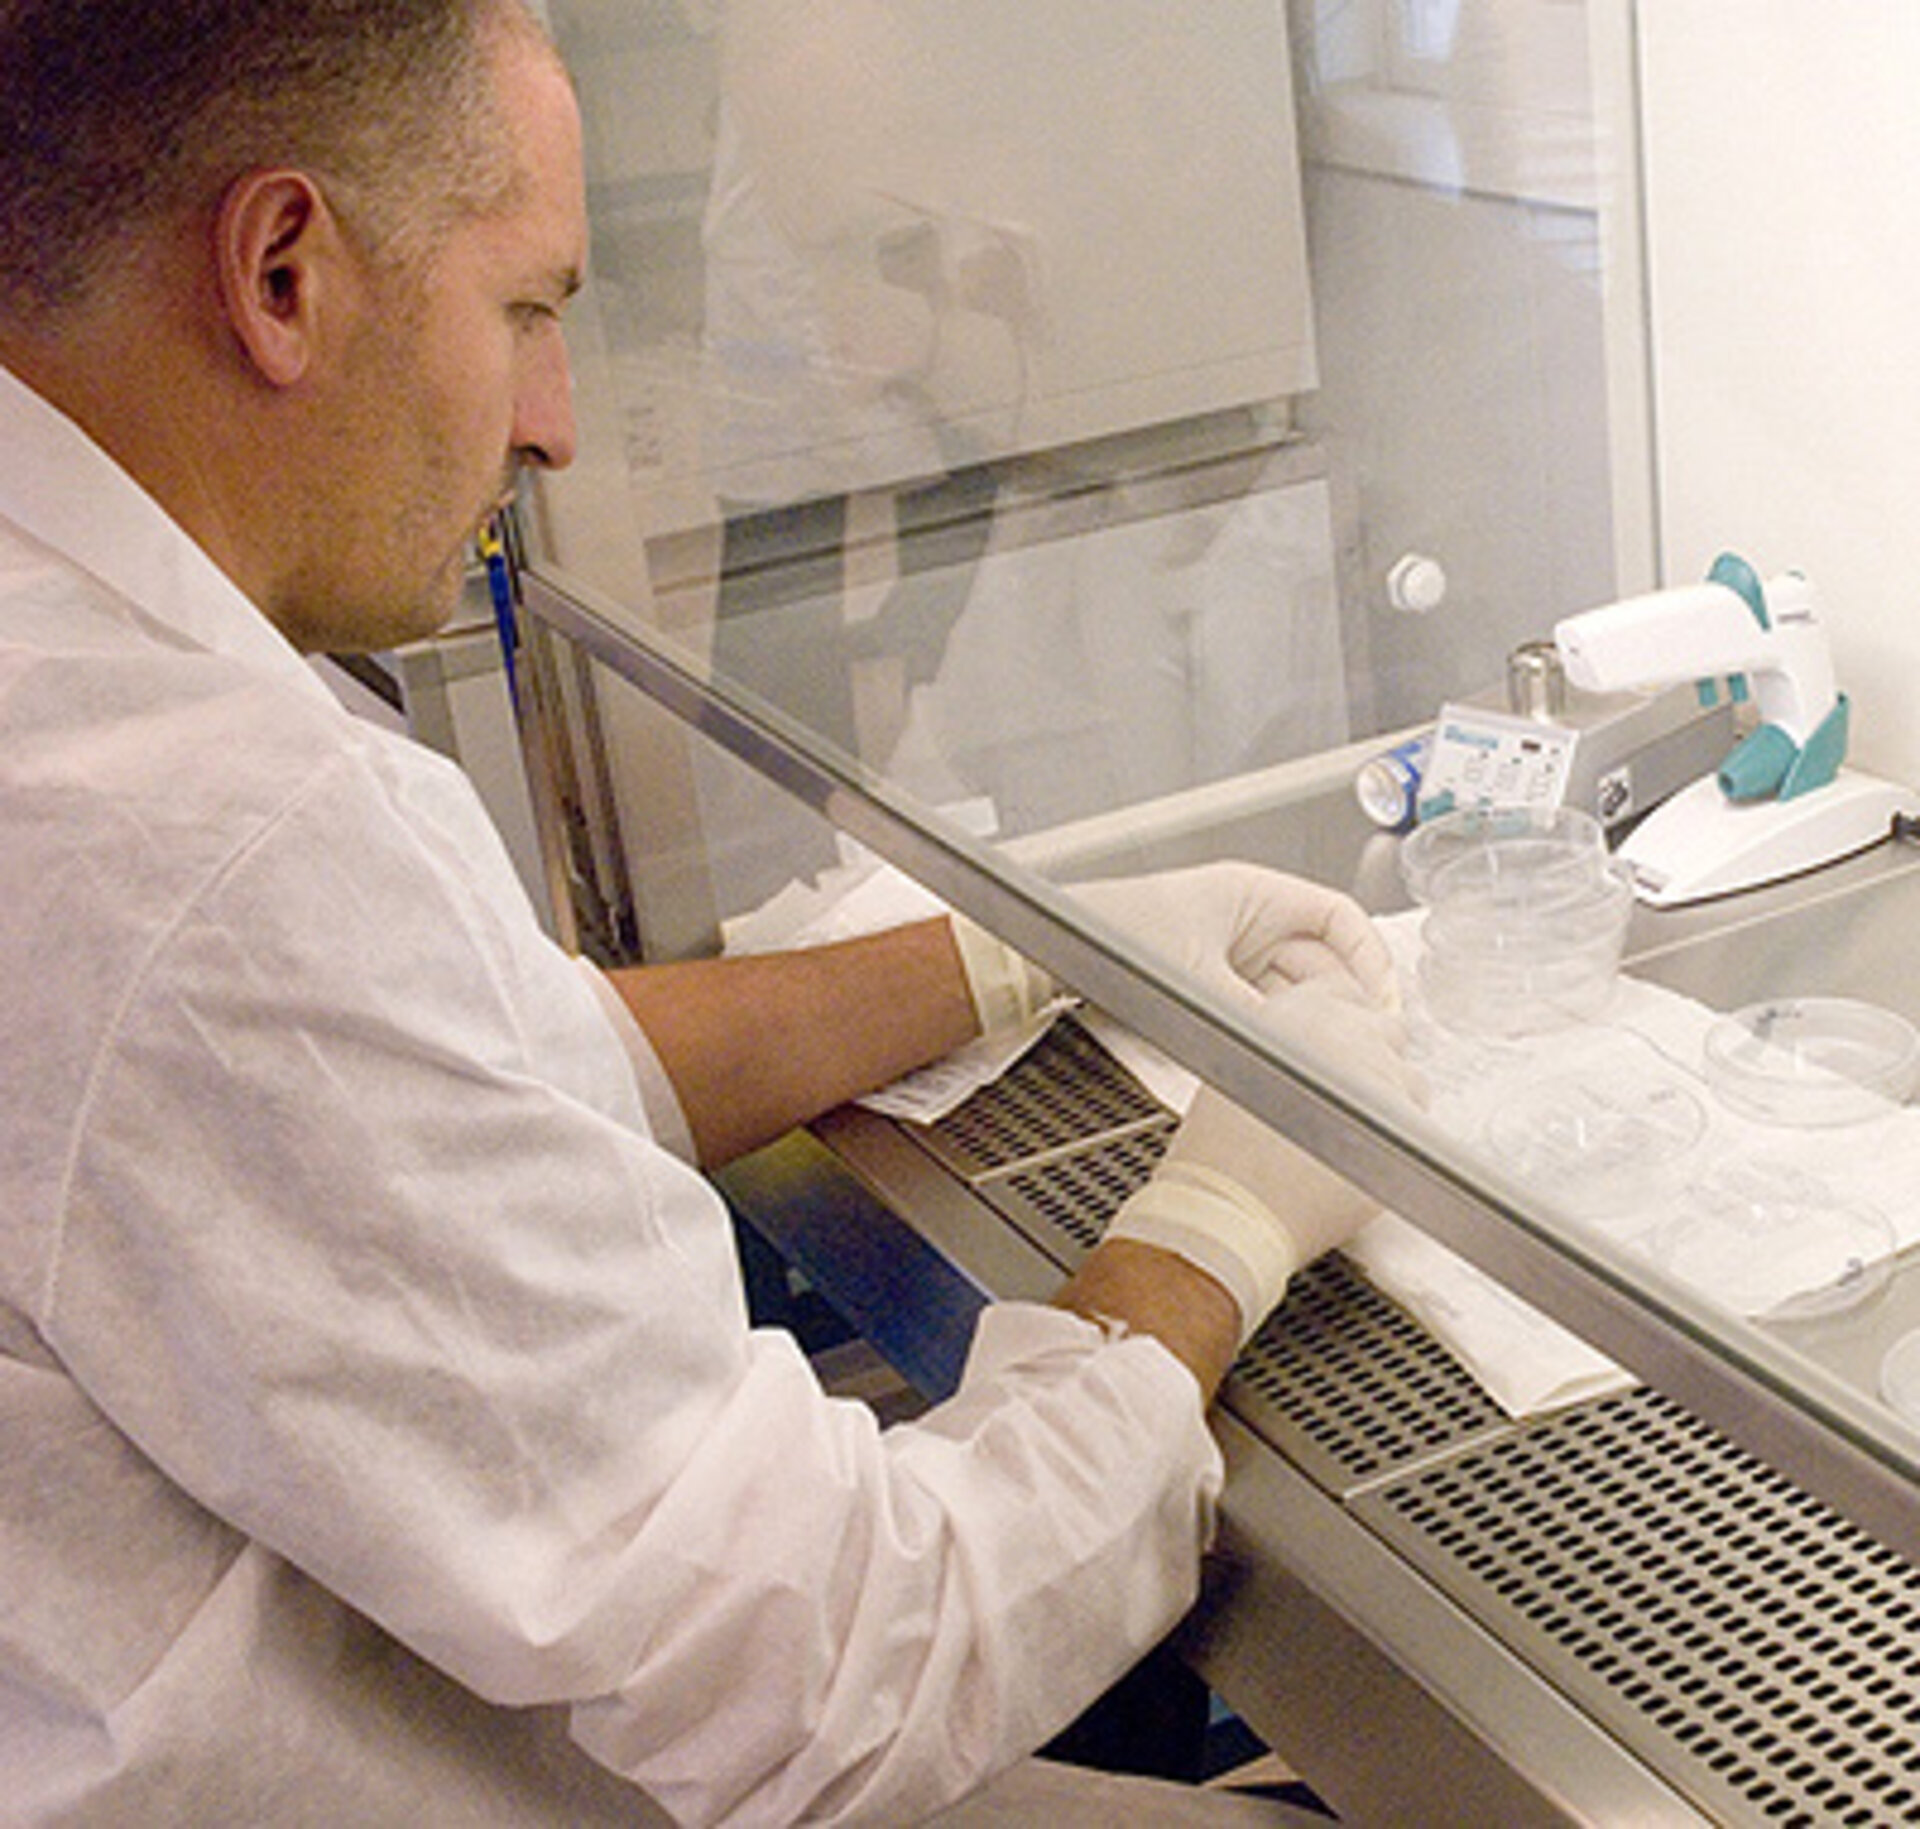 Preparing experiments in the ESTEC labs